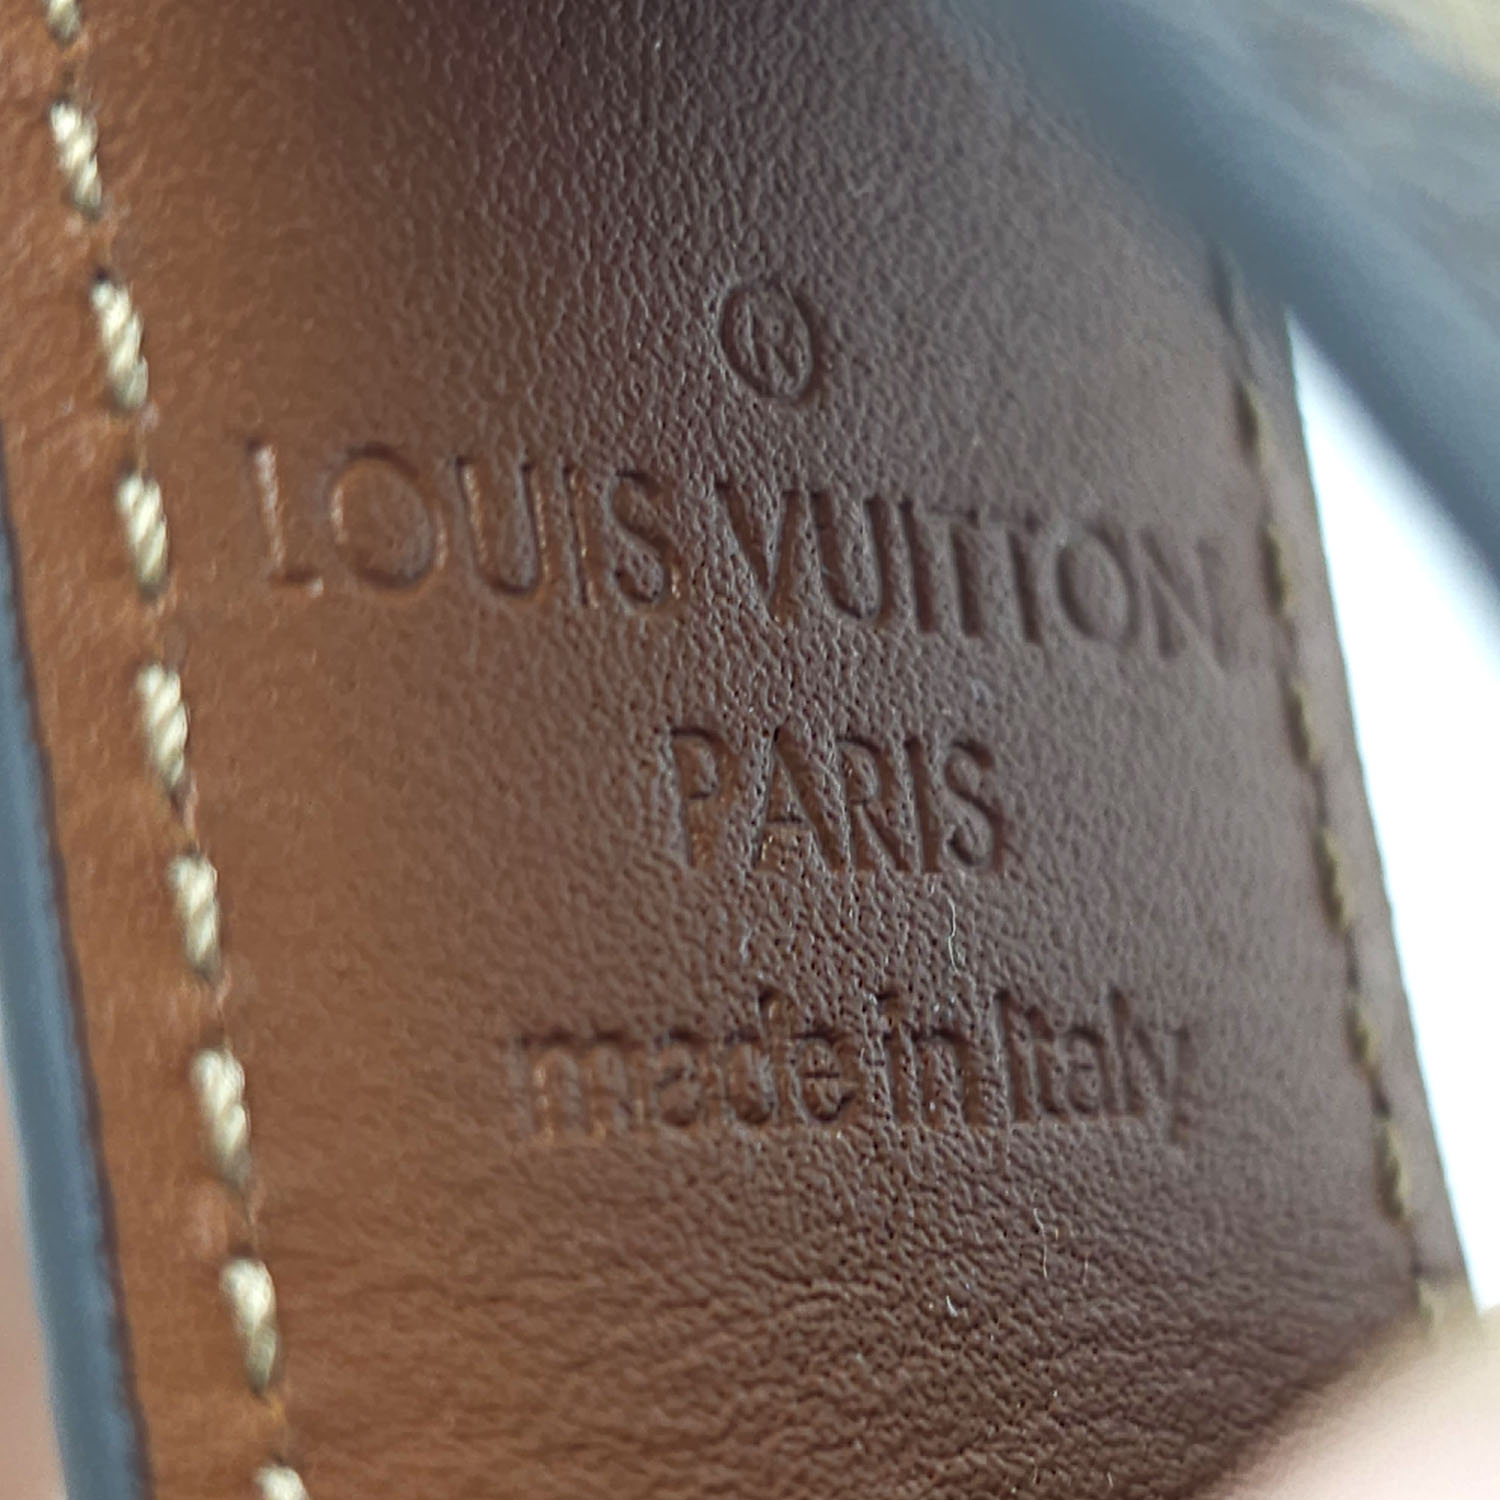 Louis Vuitton Monogram Dauphine Dragonne Key Holder